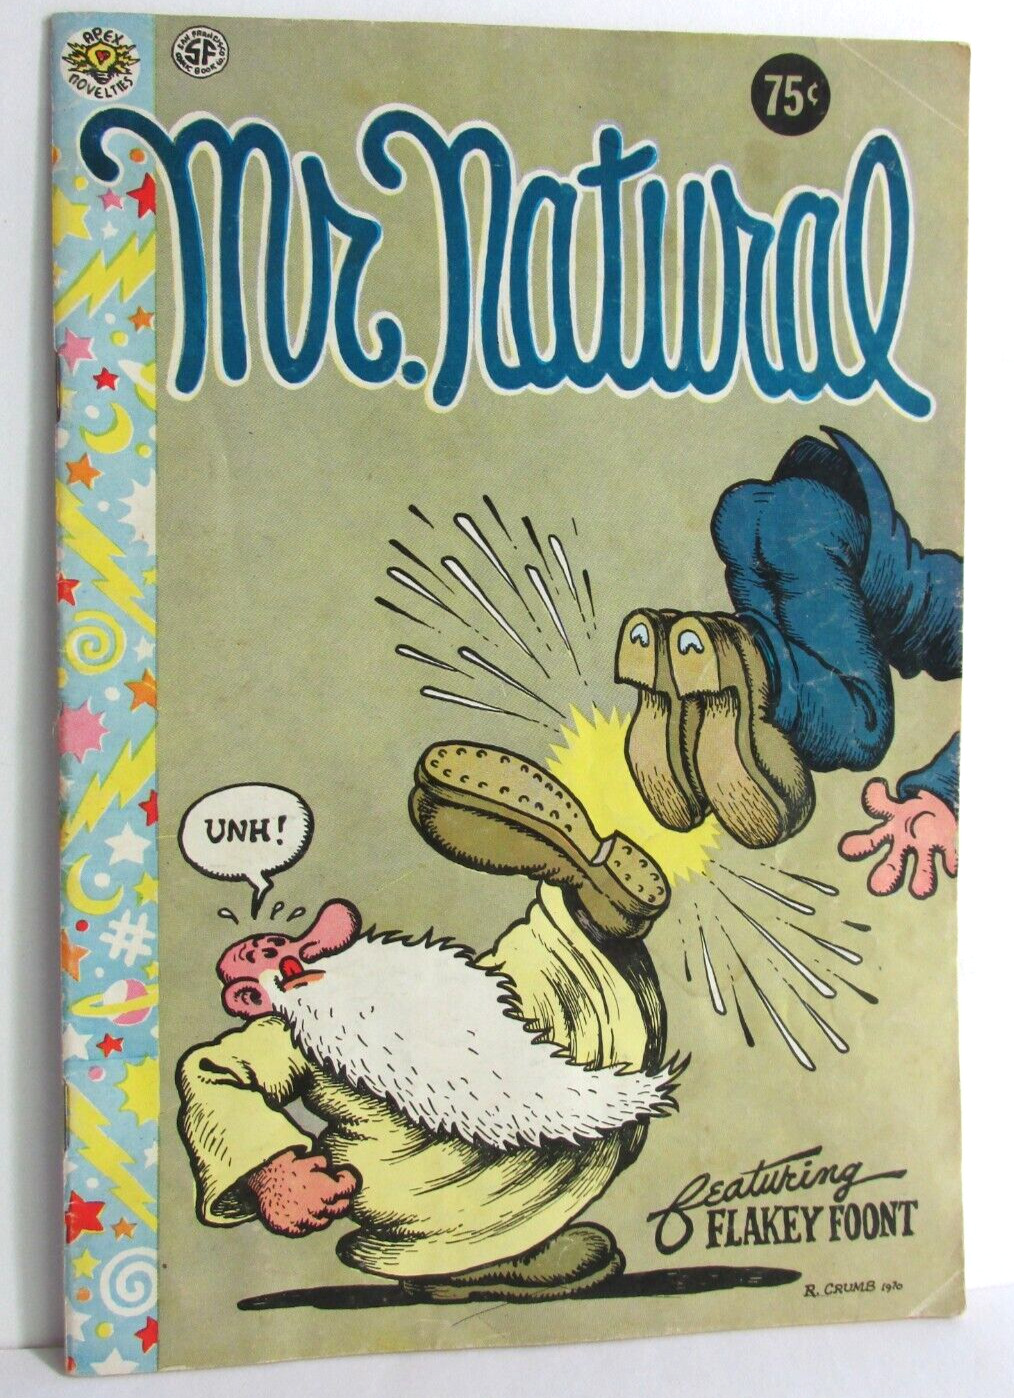 MR NATURAL #1 1970 ROBERT CRUMB Underground Comic Book, 75 cent Cover Price ?